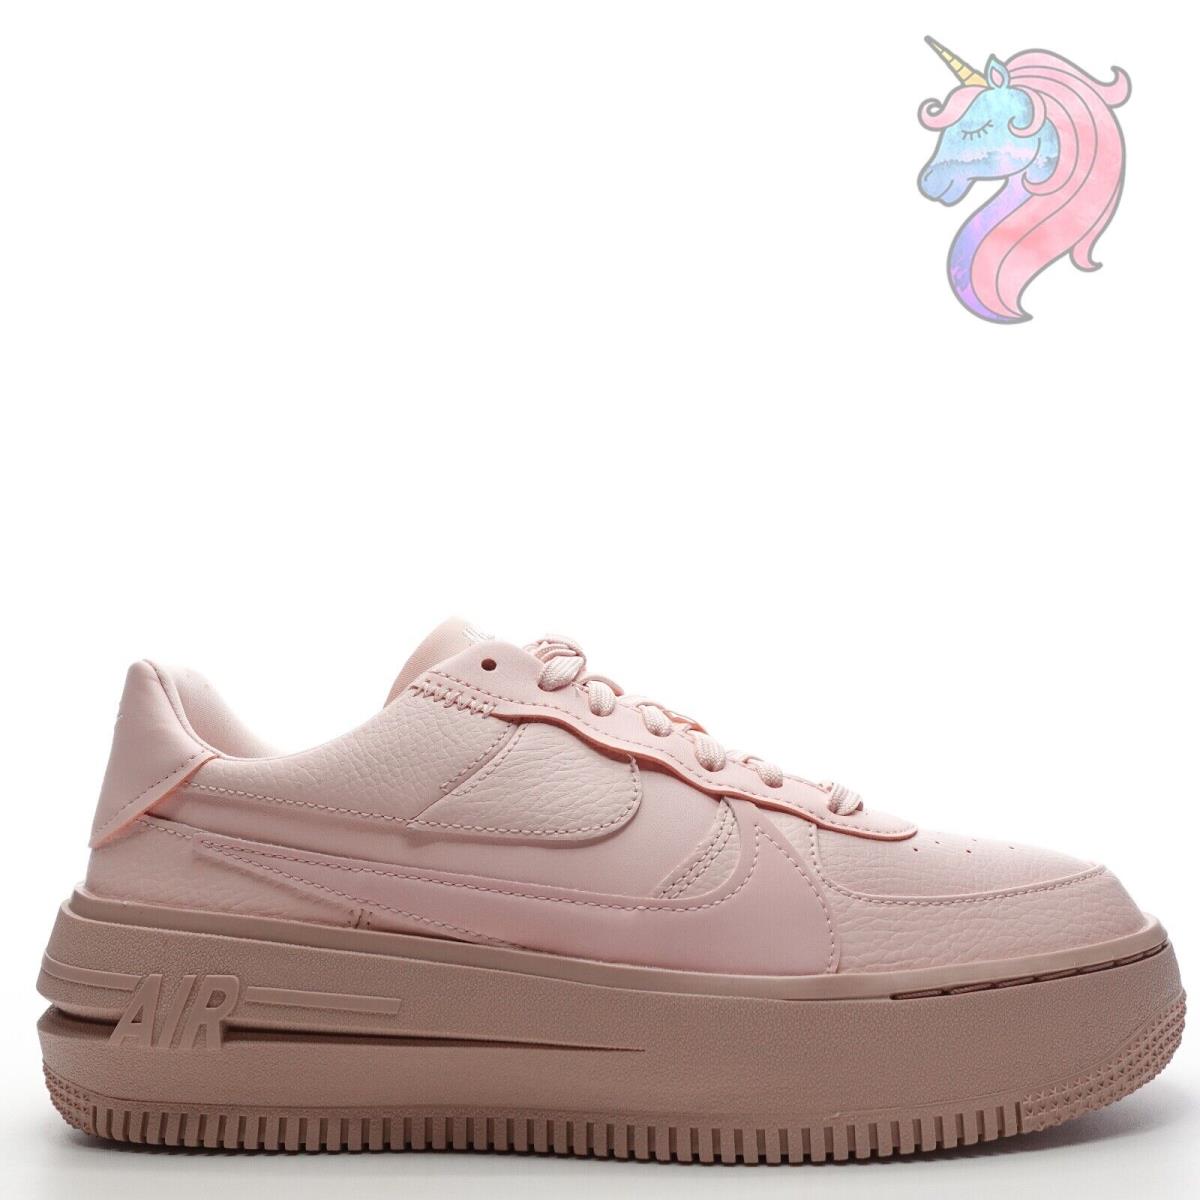 Womens Nike Air Force 1 Size 9 Platform Shoes Pink Oxford DJ9946-600